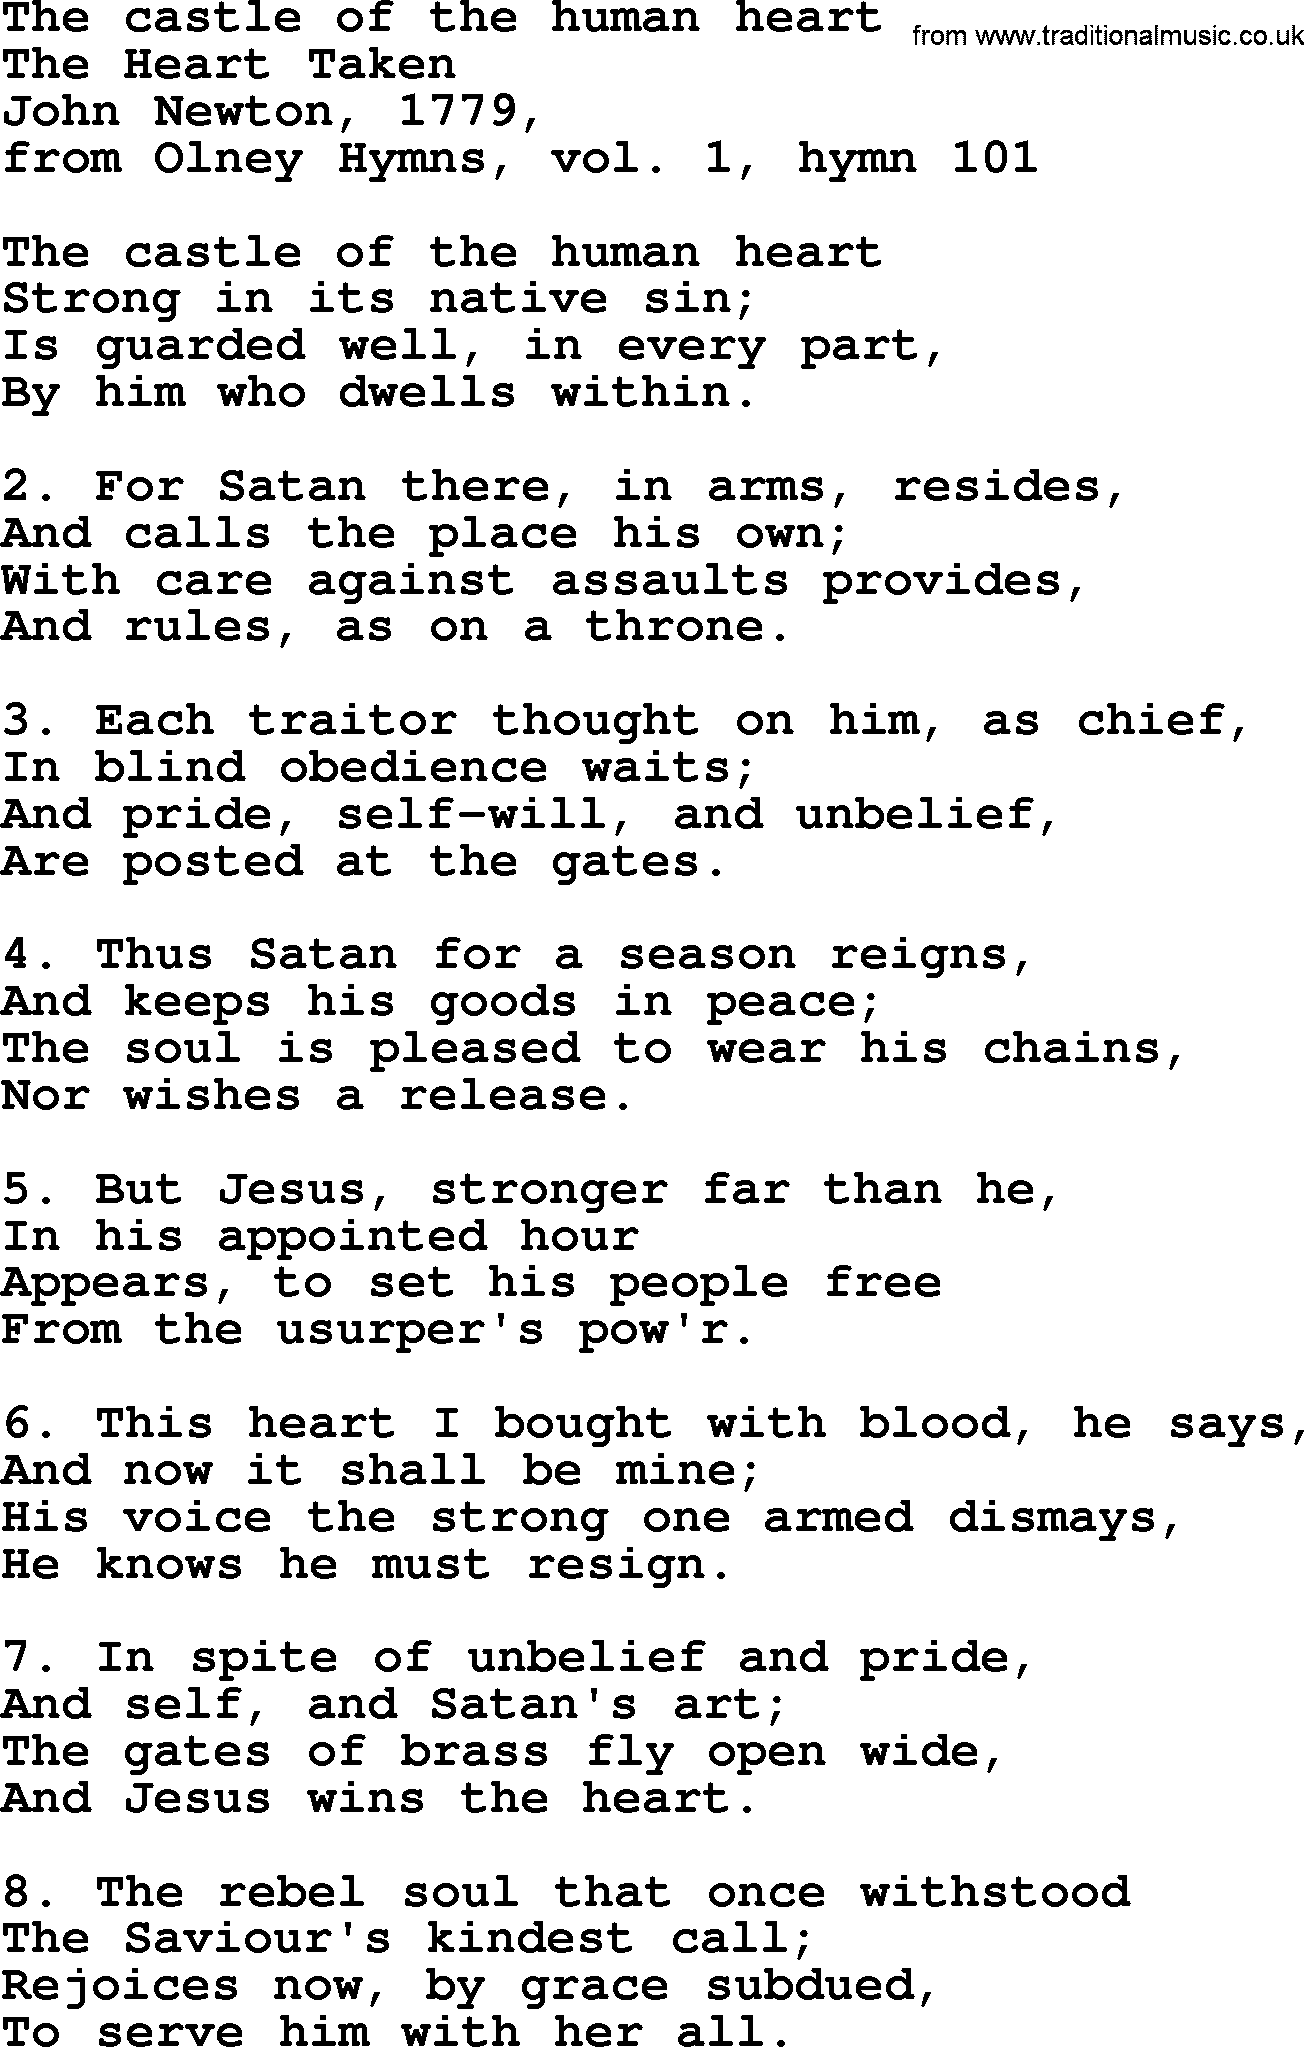 John Newton hymn: The Castle Of The Human Heart, lyrics